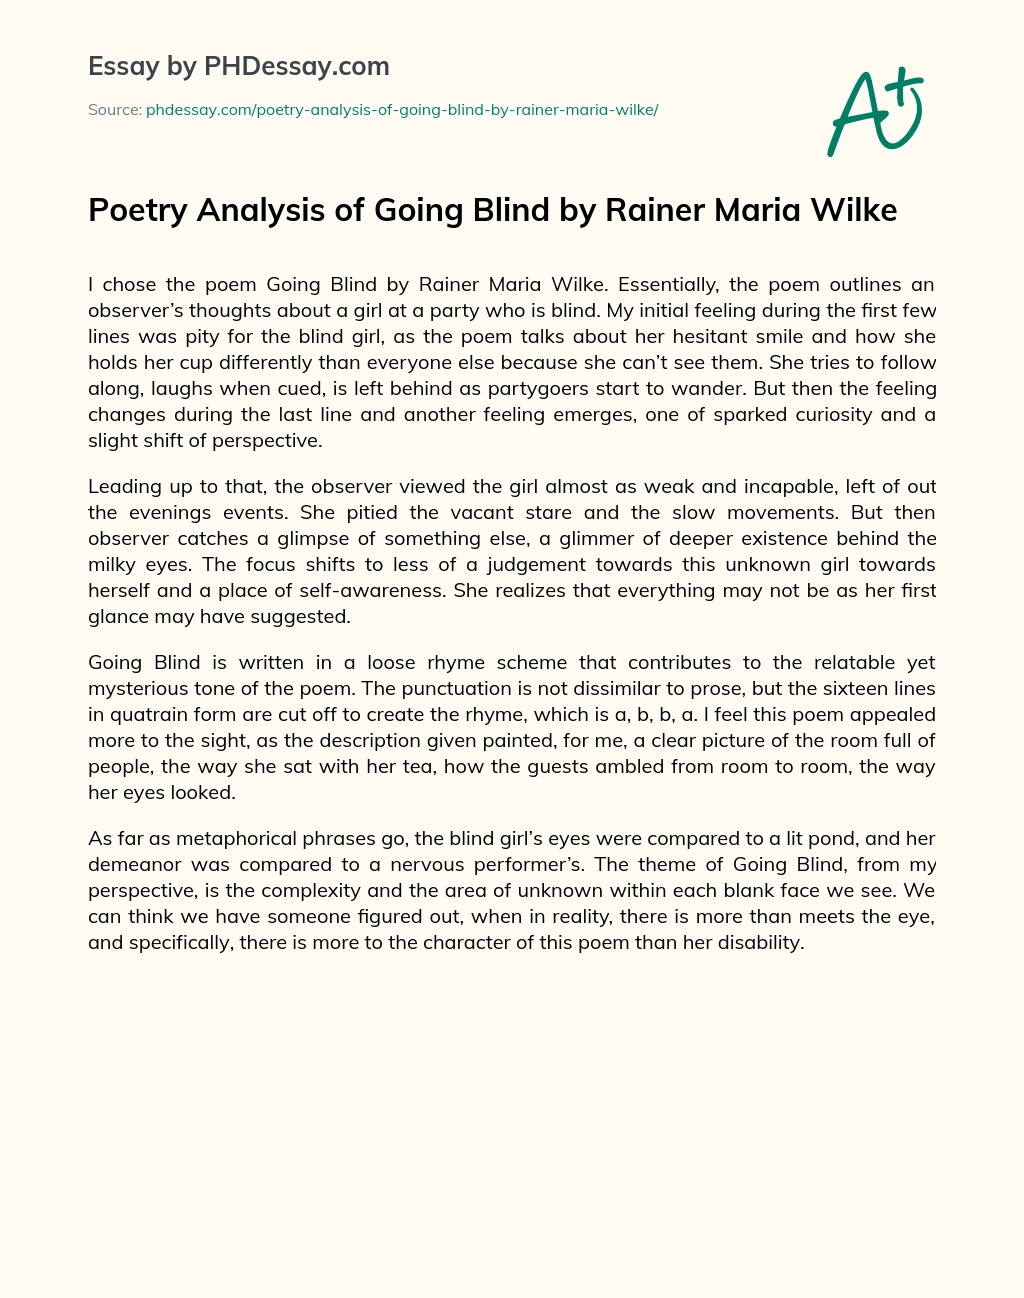 Poetry Analysis of Going Blind by Rainer Maria Wilke essay